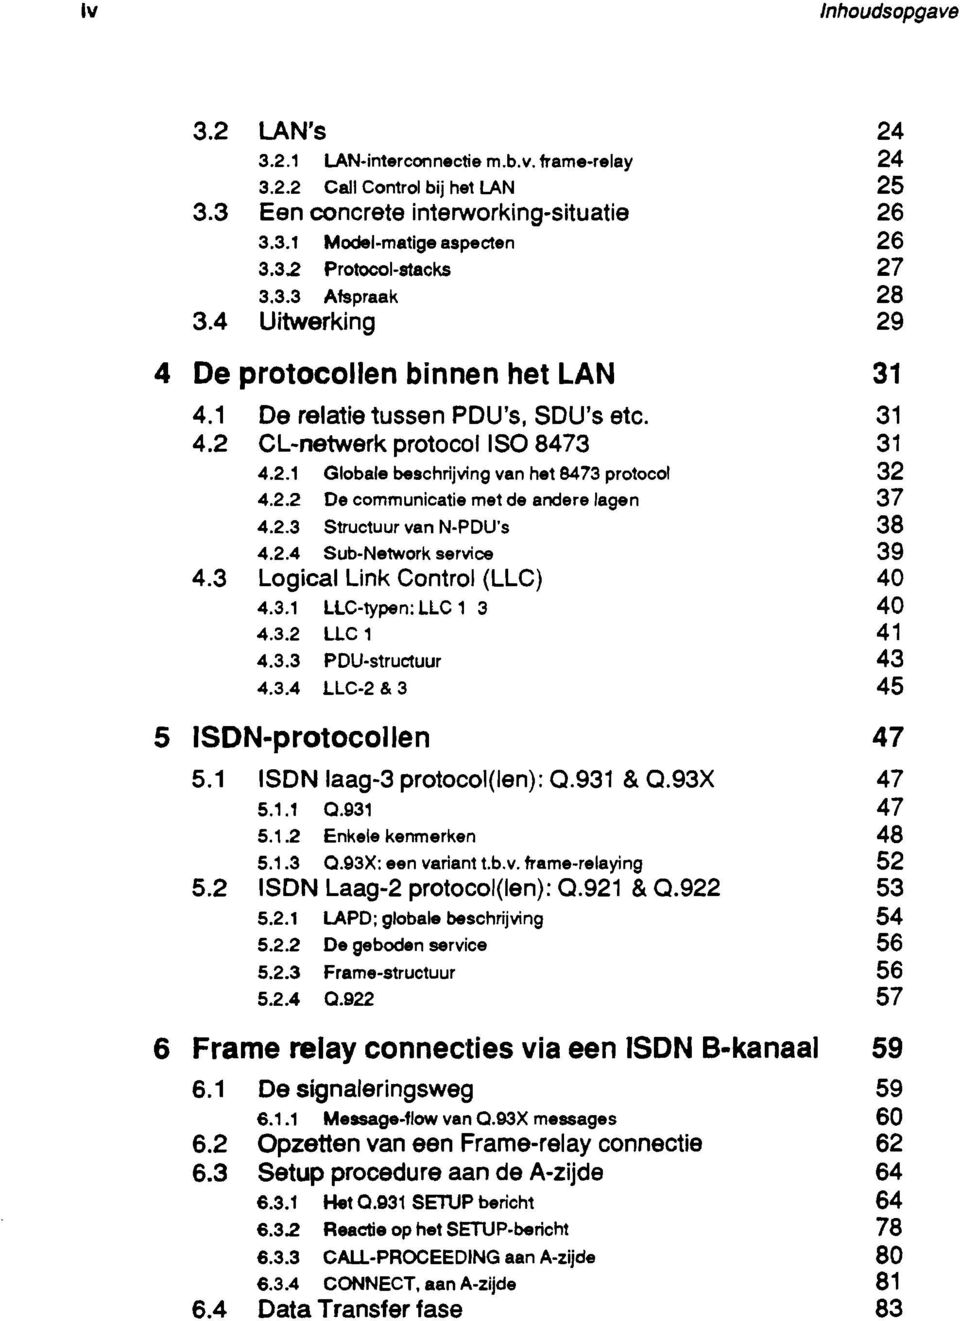 2.2 De communicatie met de andere lagen 37 4.2.3 Structuur van N PDU's 38 4.2.4 Sub Network service 39 4.3 Logical Link Control (LLC) 40 4.3.1 llc-typen: llc 1 3 40 4.3.2 llc 1 41 4.3.3 POU-structuur 43 4.